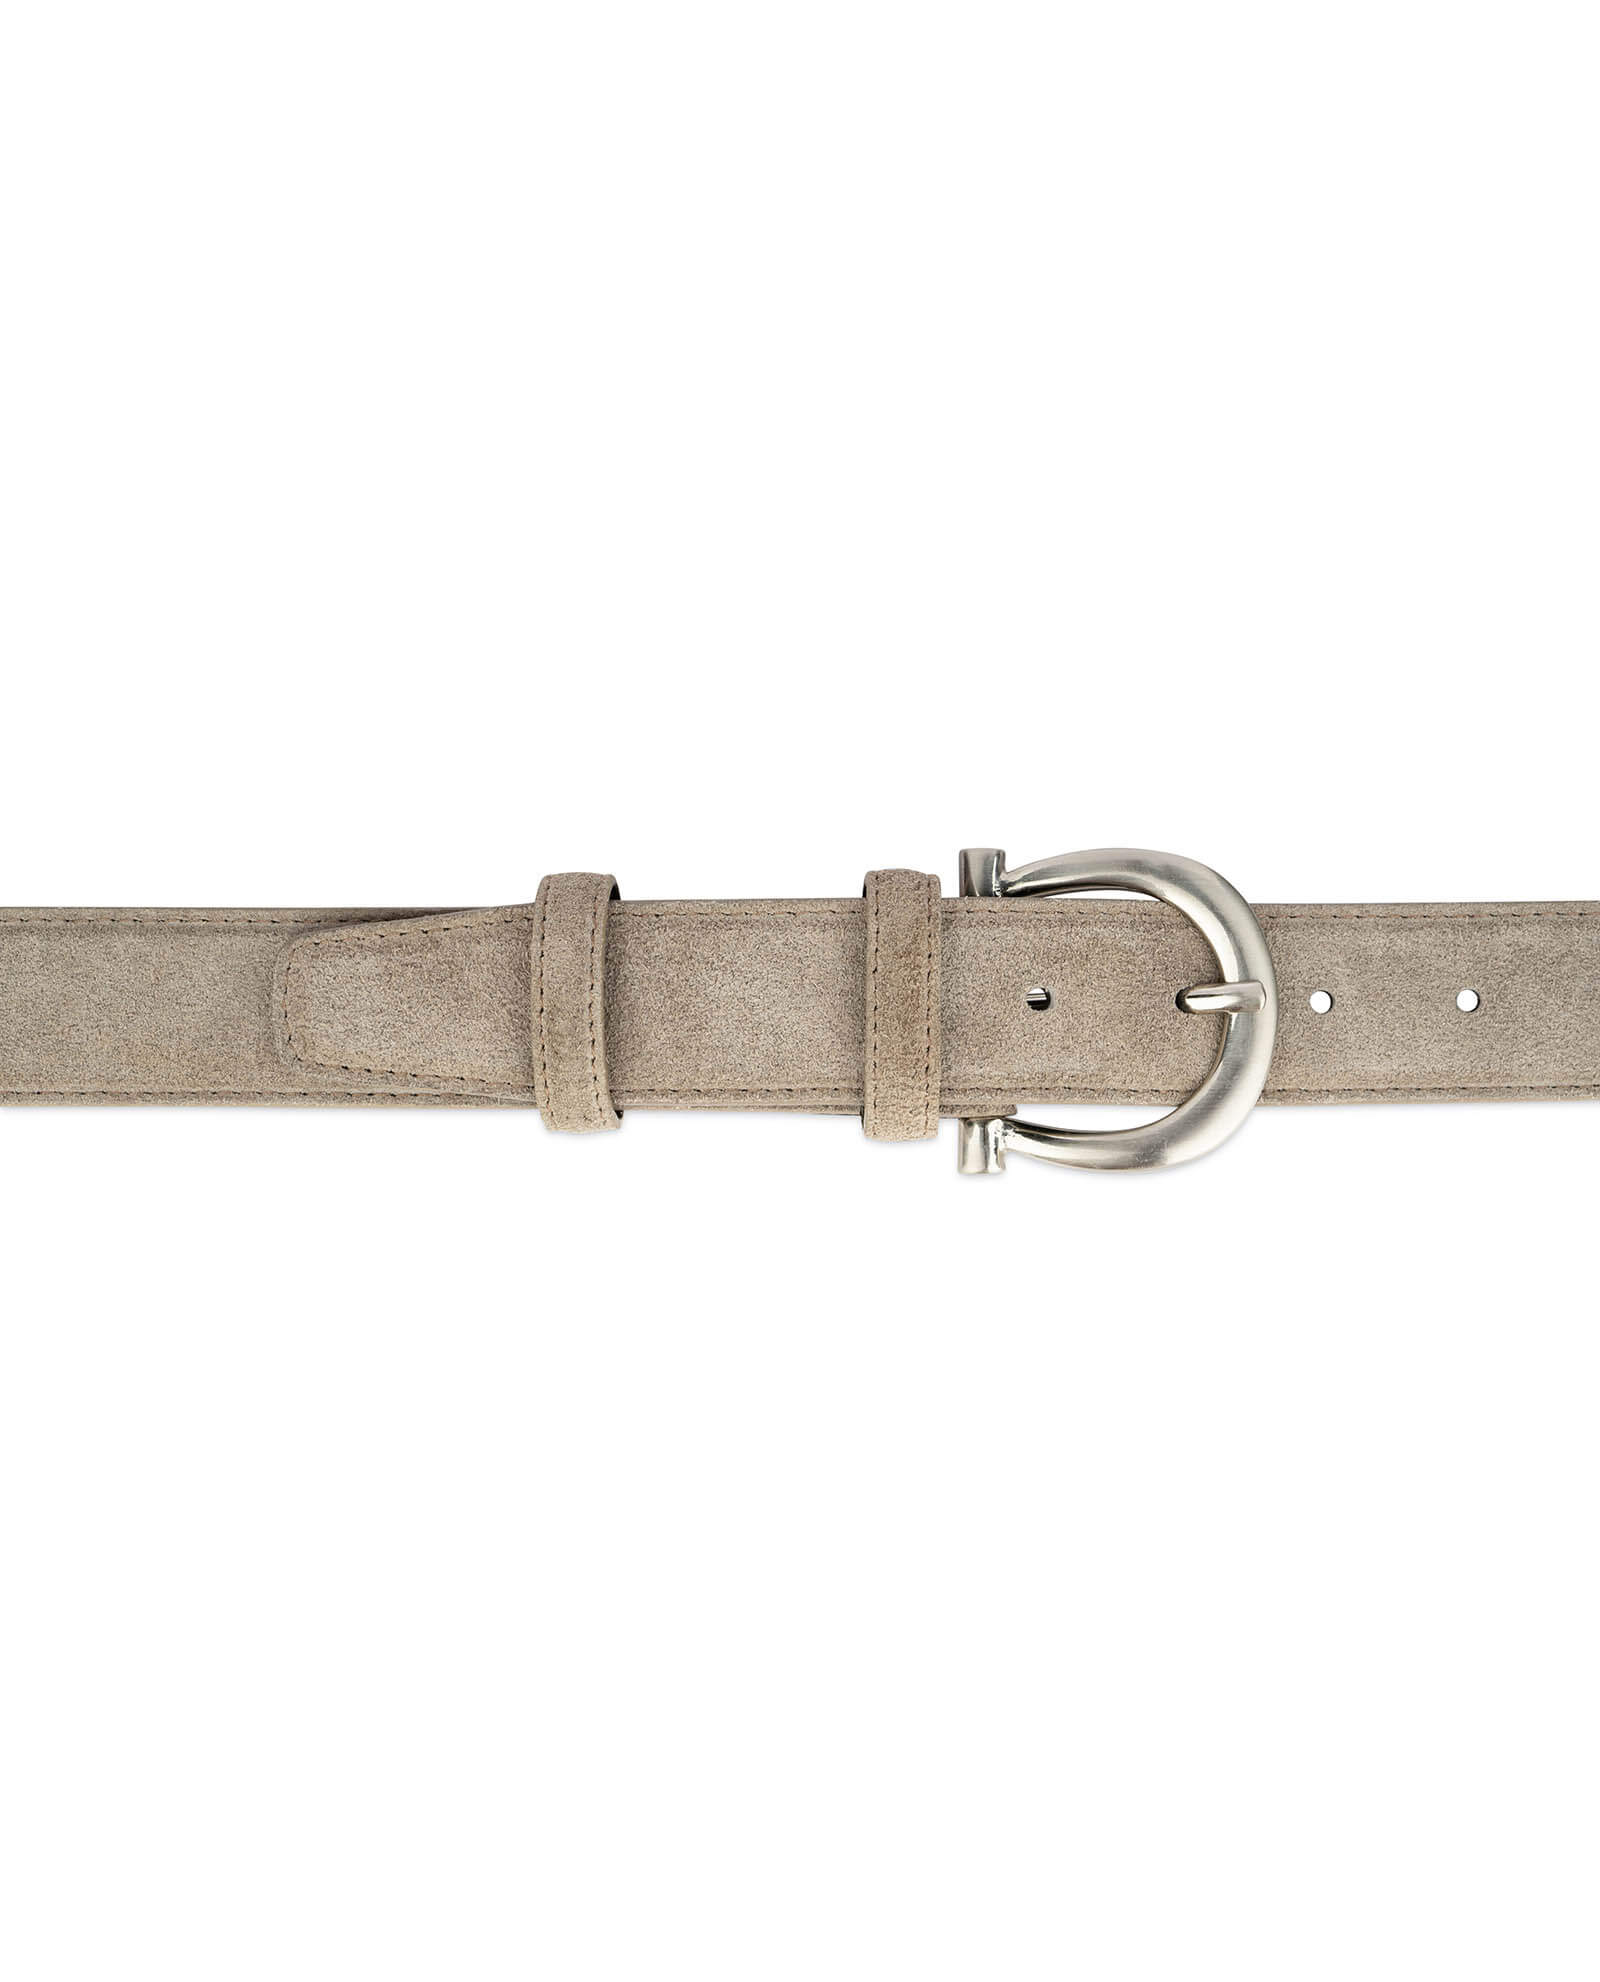 Buy Womens Taupe Belt With Italian Buckle | LeatherBeltsOnline.com